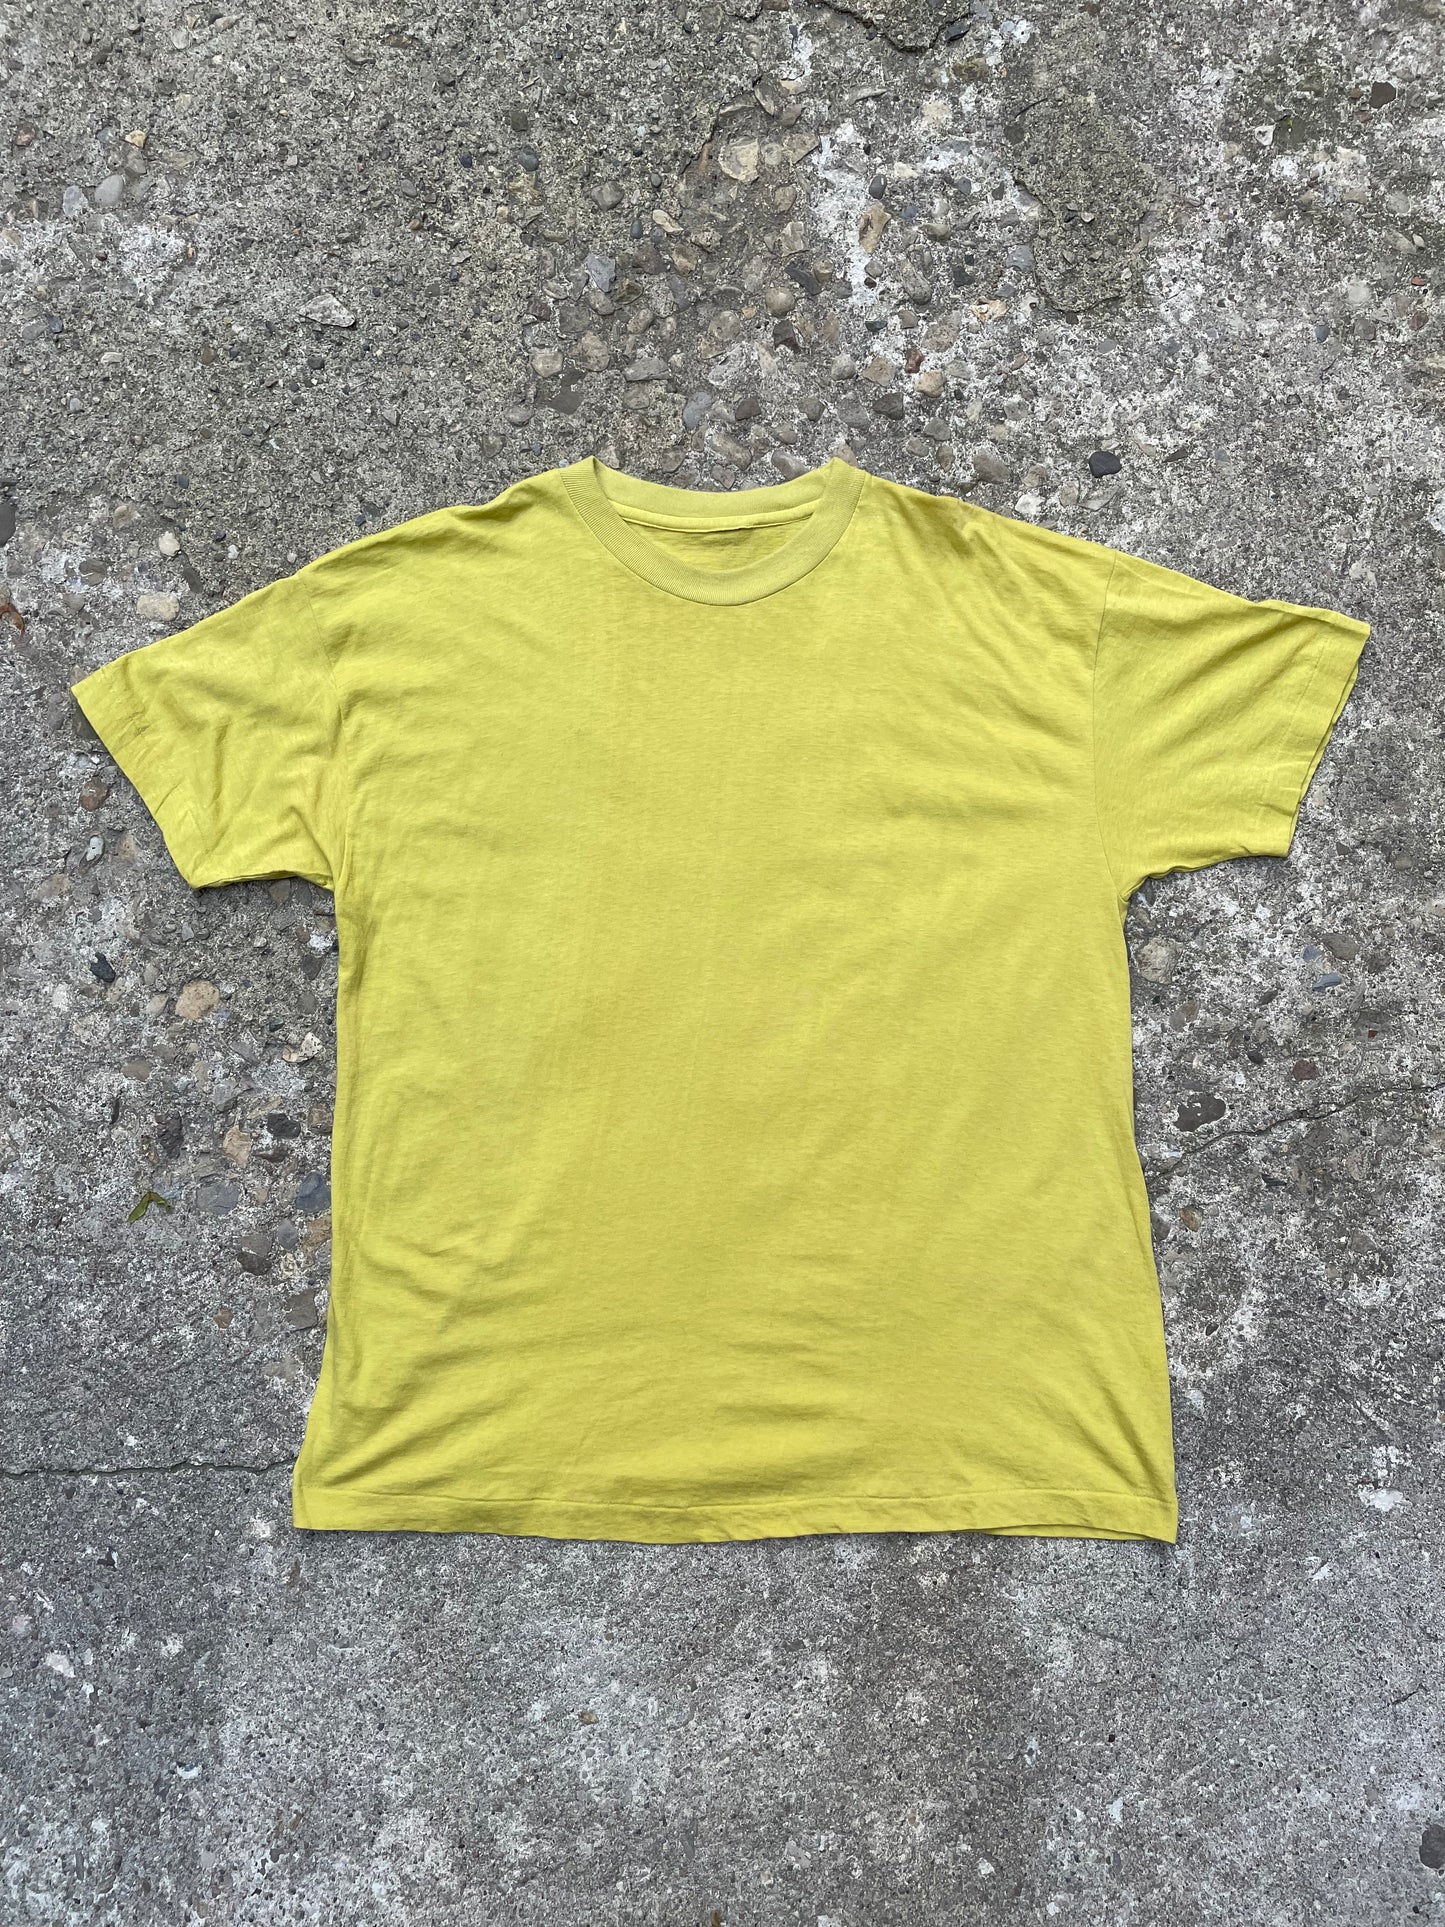 1990's Pale Green Blank T-Shirt - XL